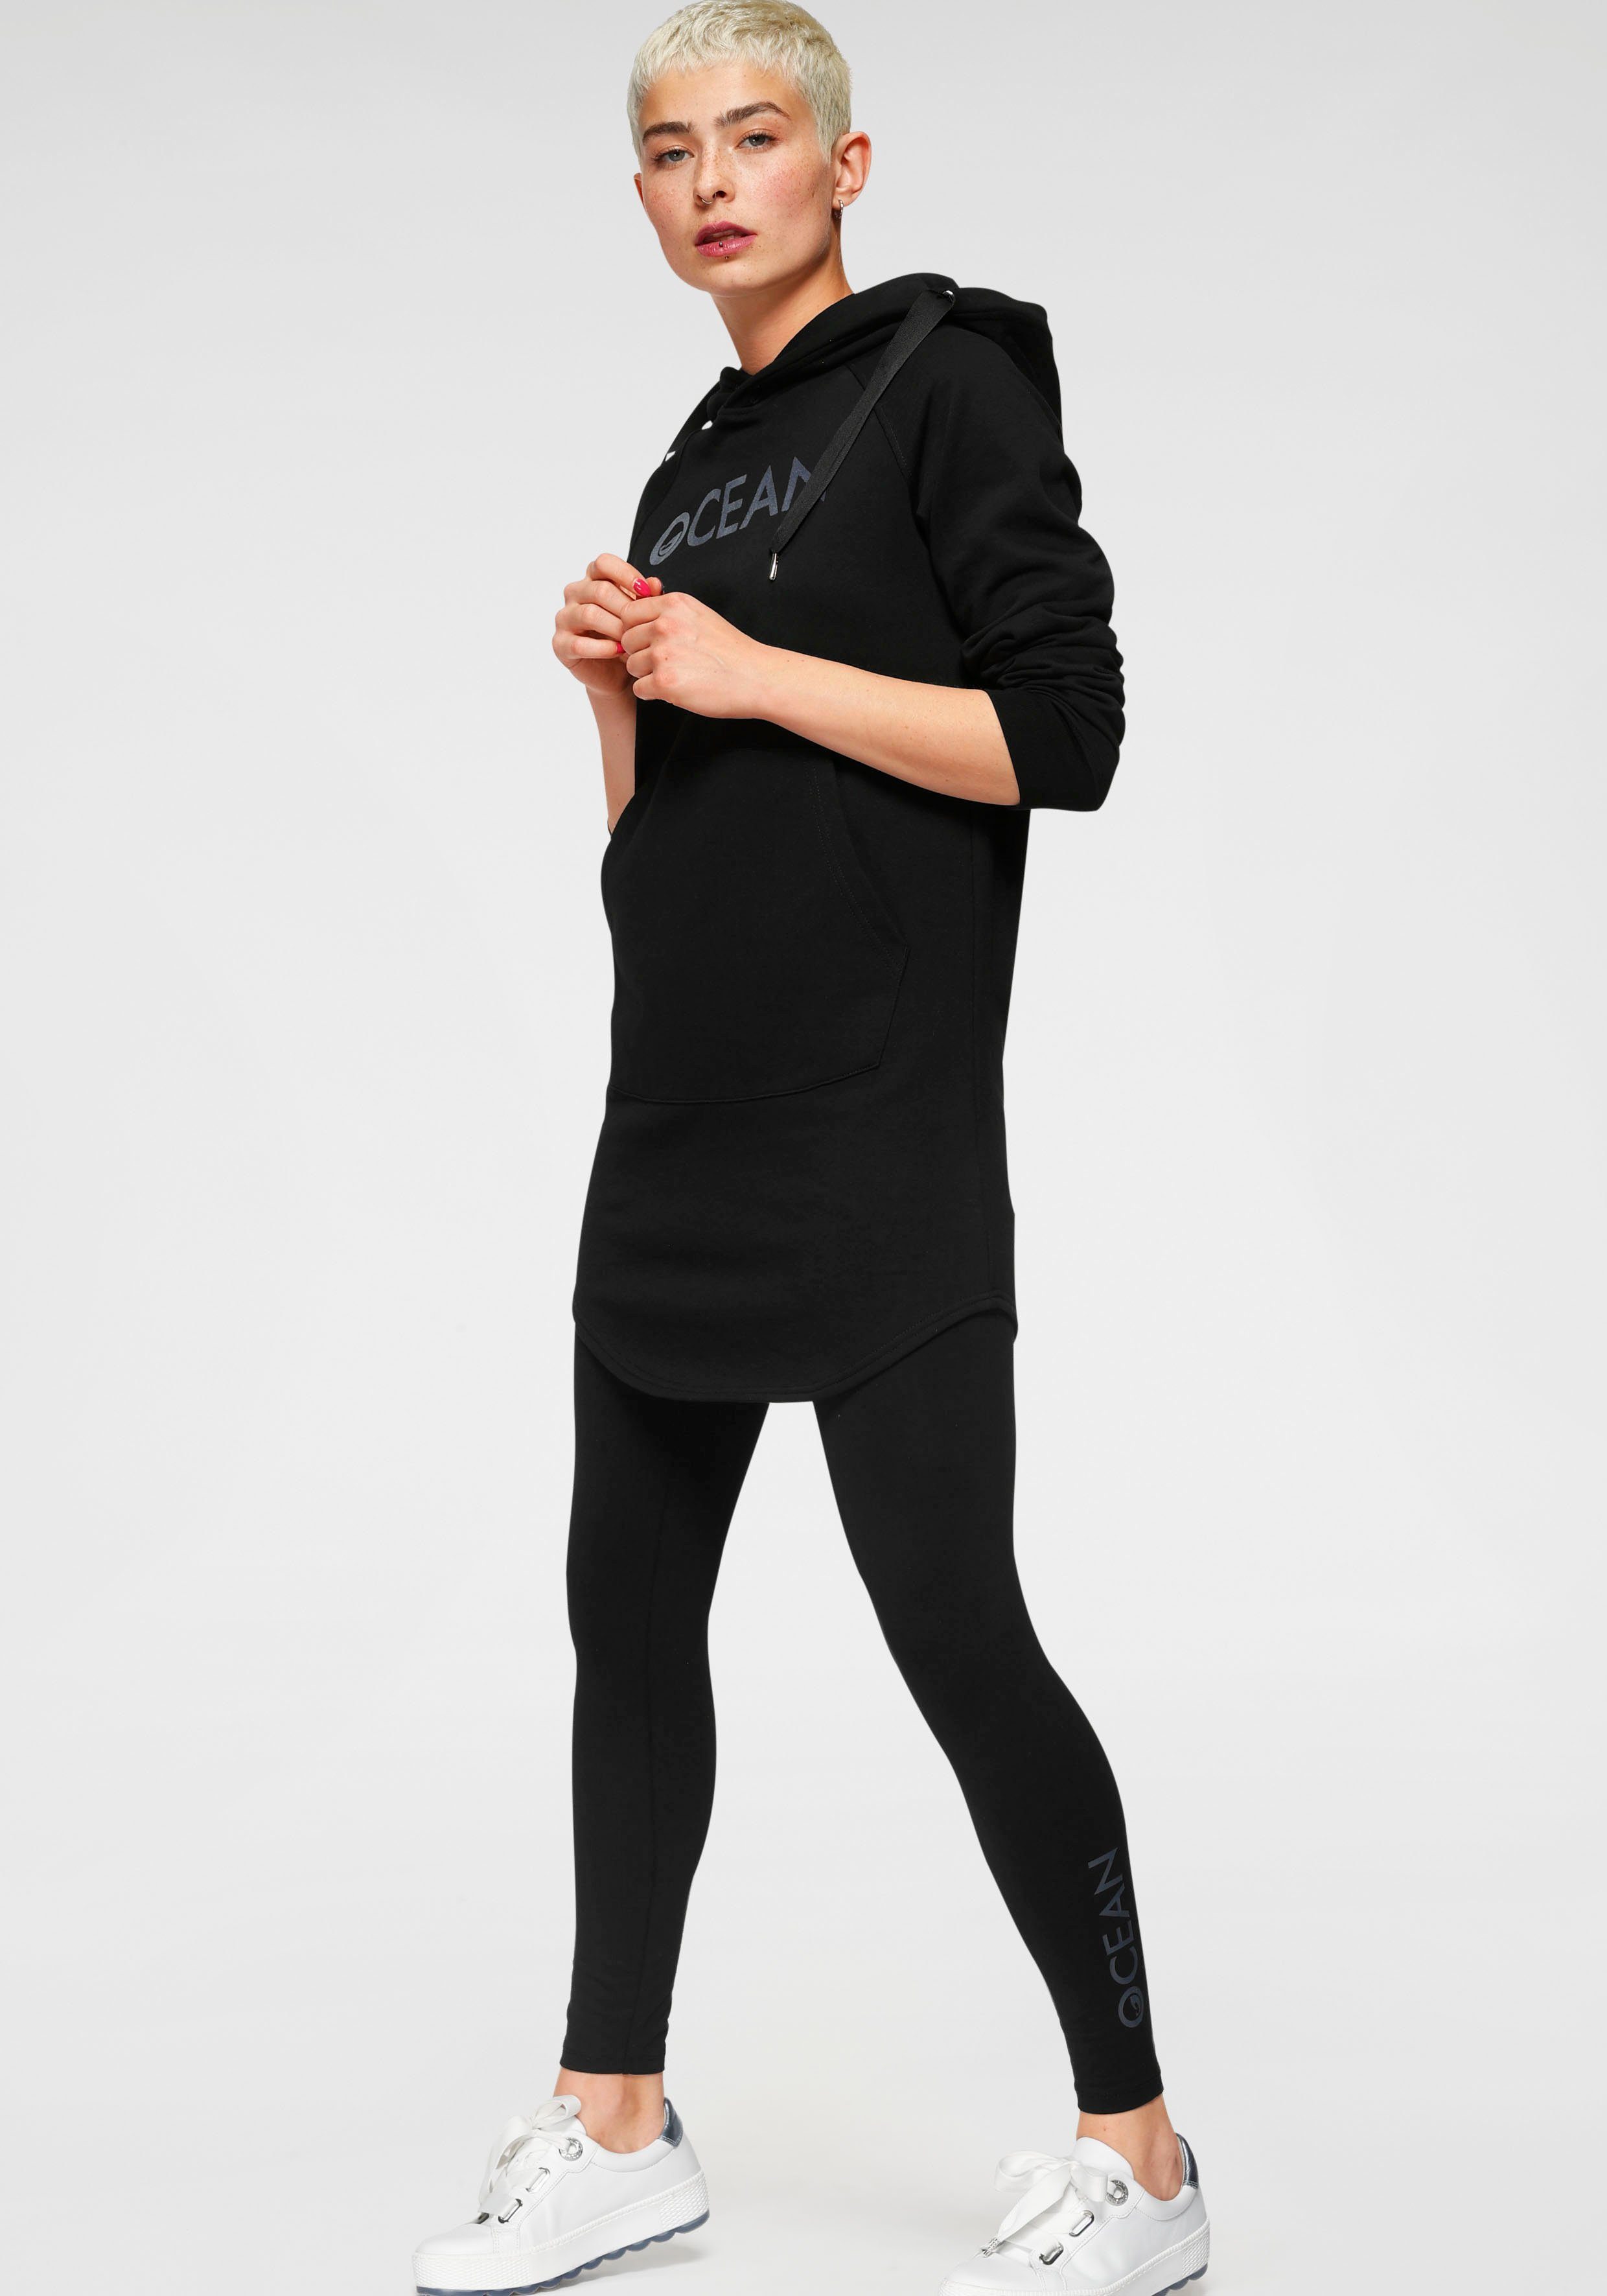 Ocean Sportswear Jogginganzug Essentials (Packung, Leggings) schwarz/schwarz mit Joggingsuit 2-tlg